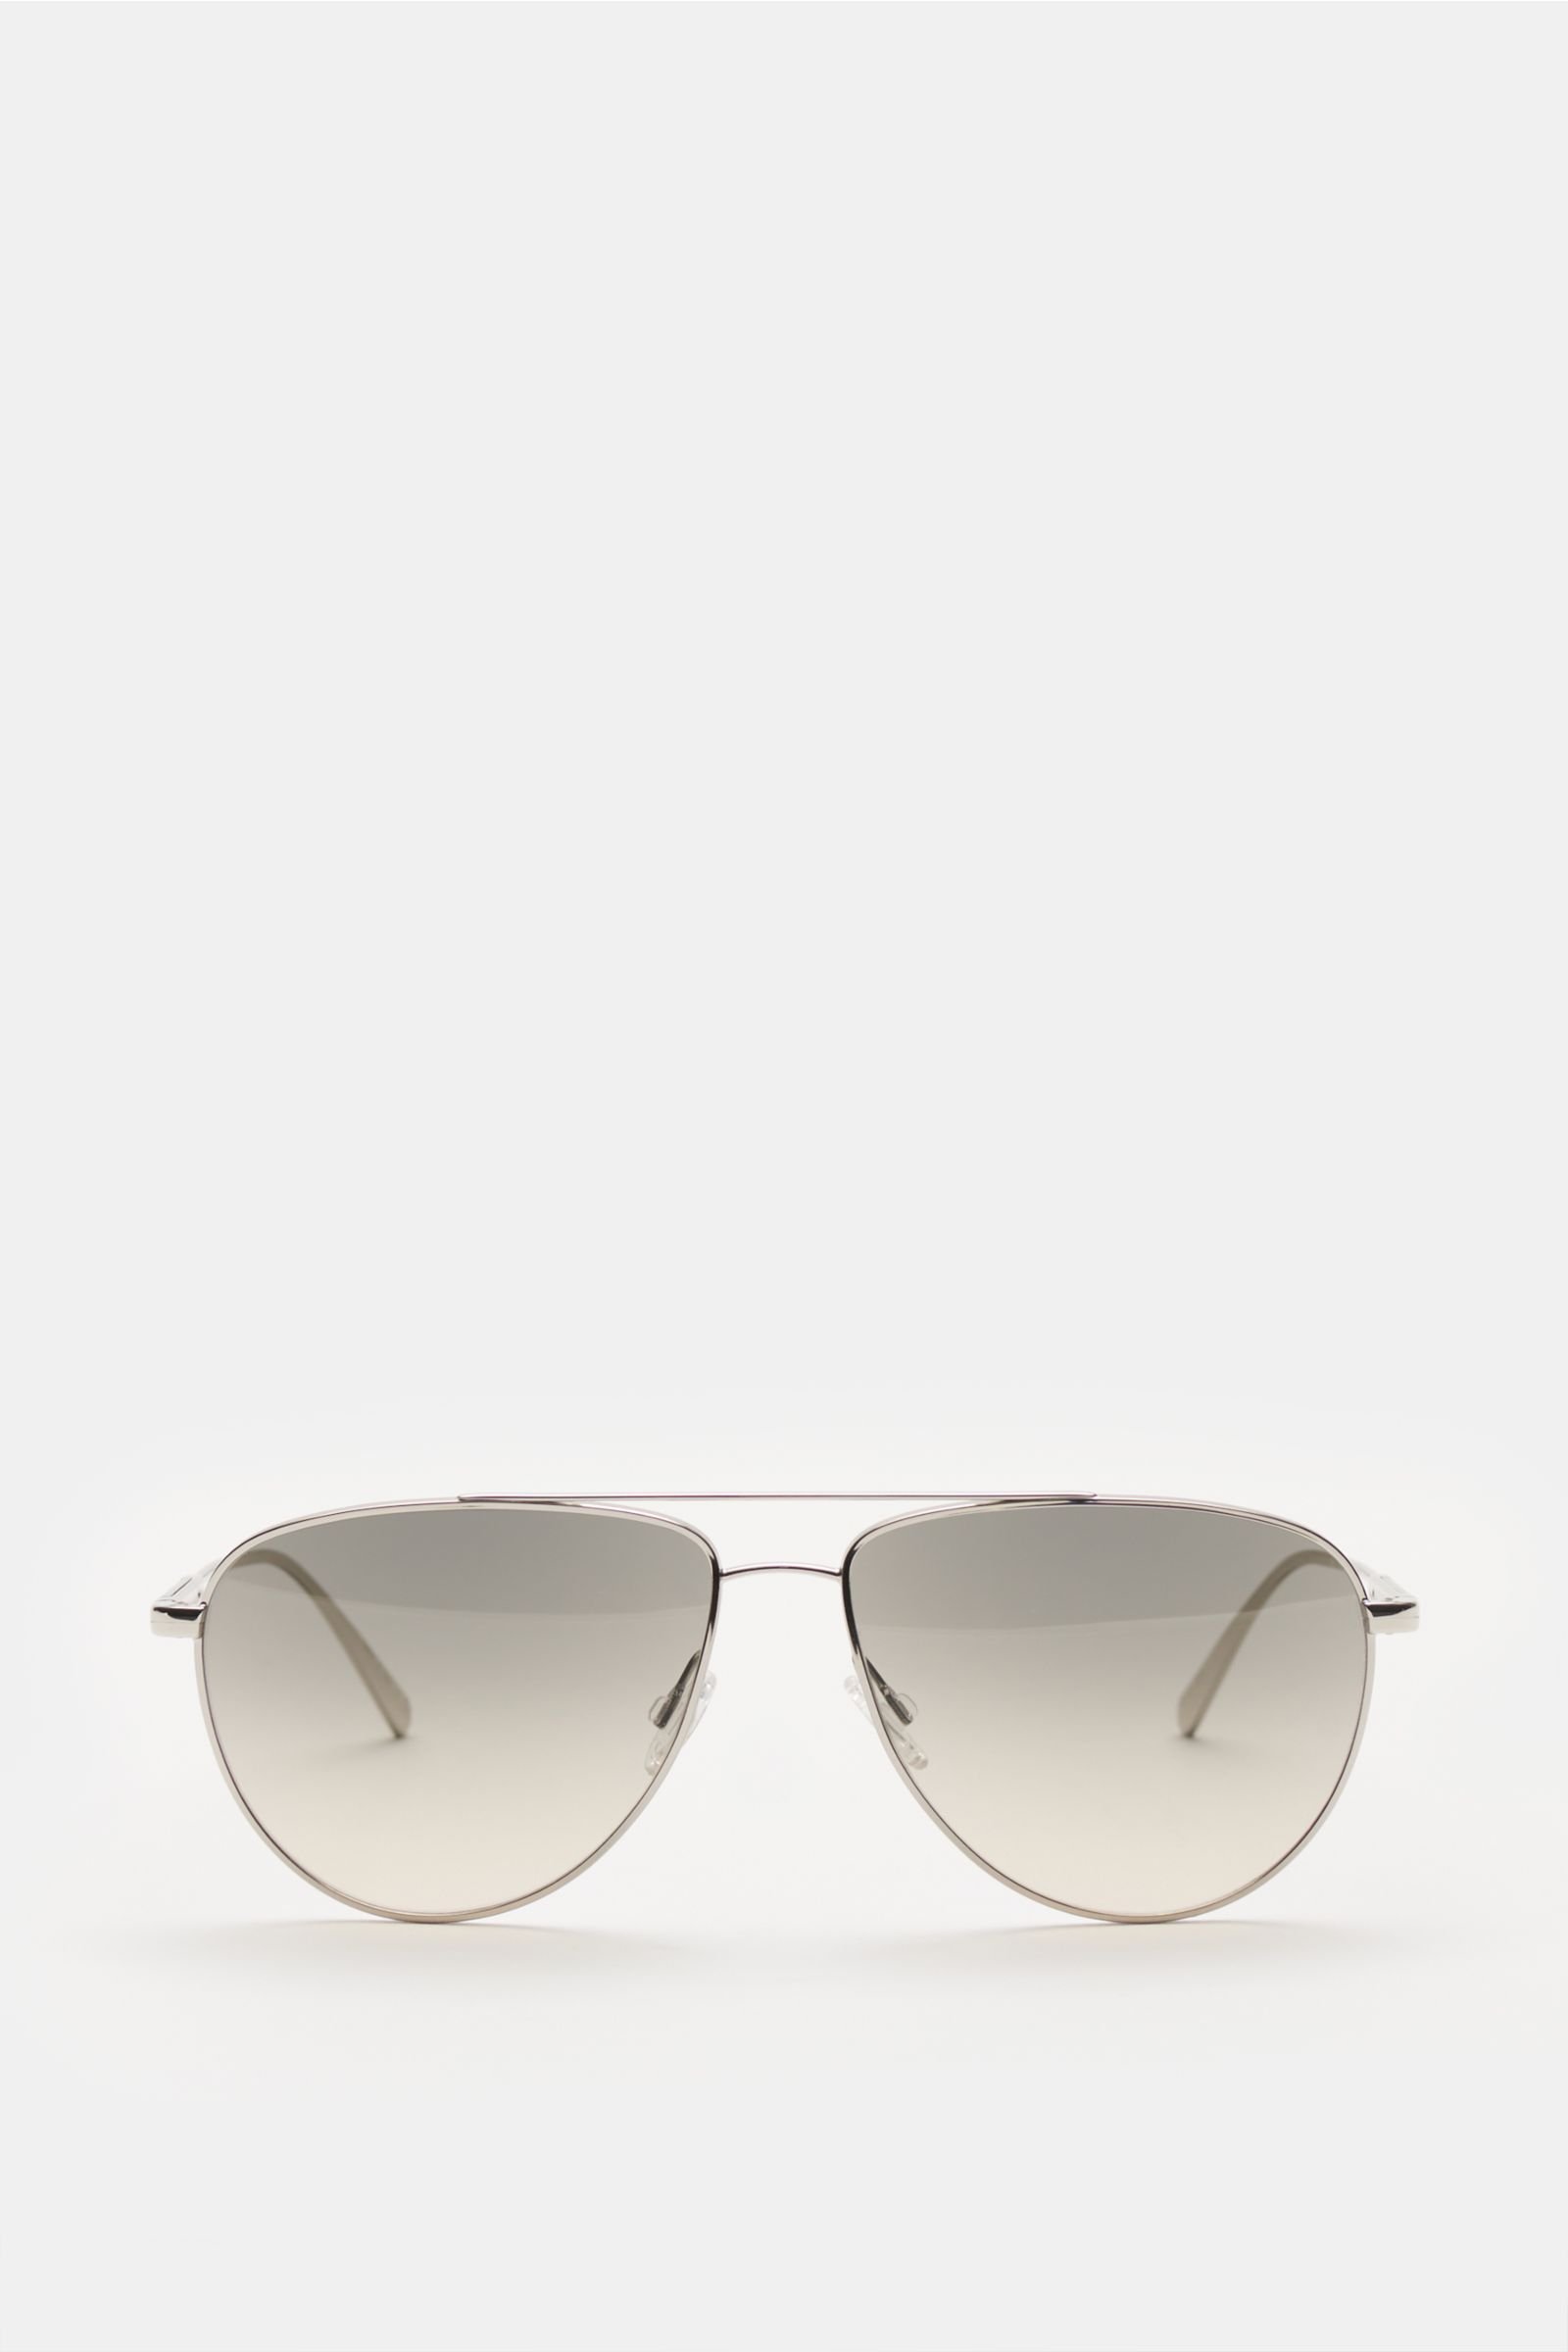 Sonnenbrille 'Disoriano' silber/grau